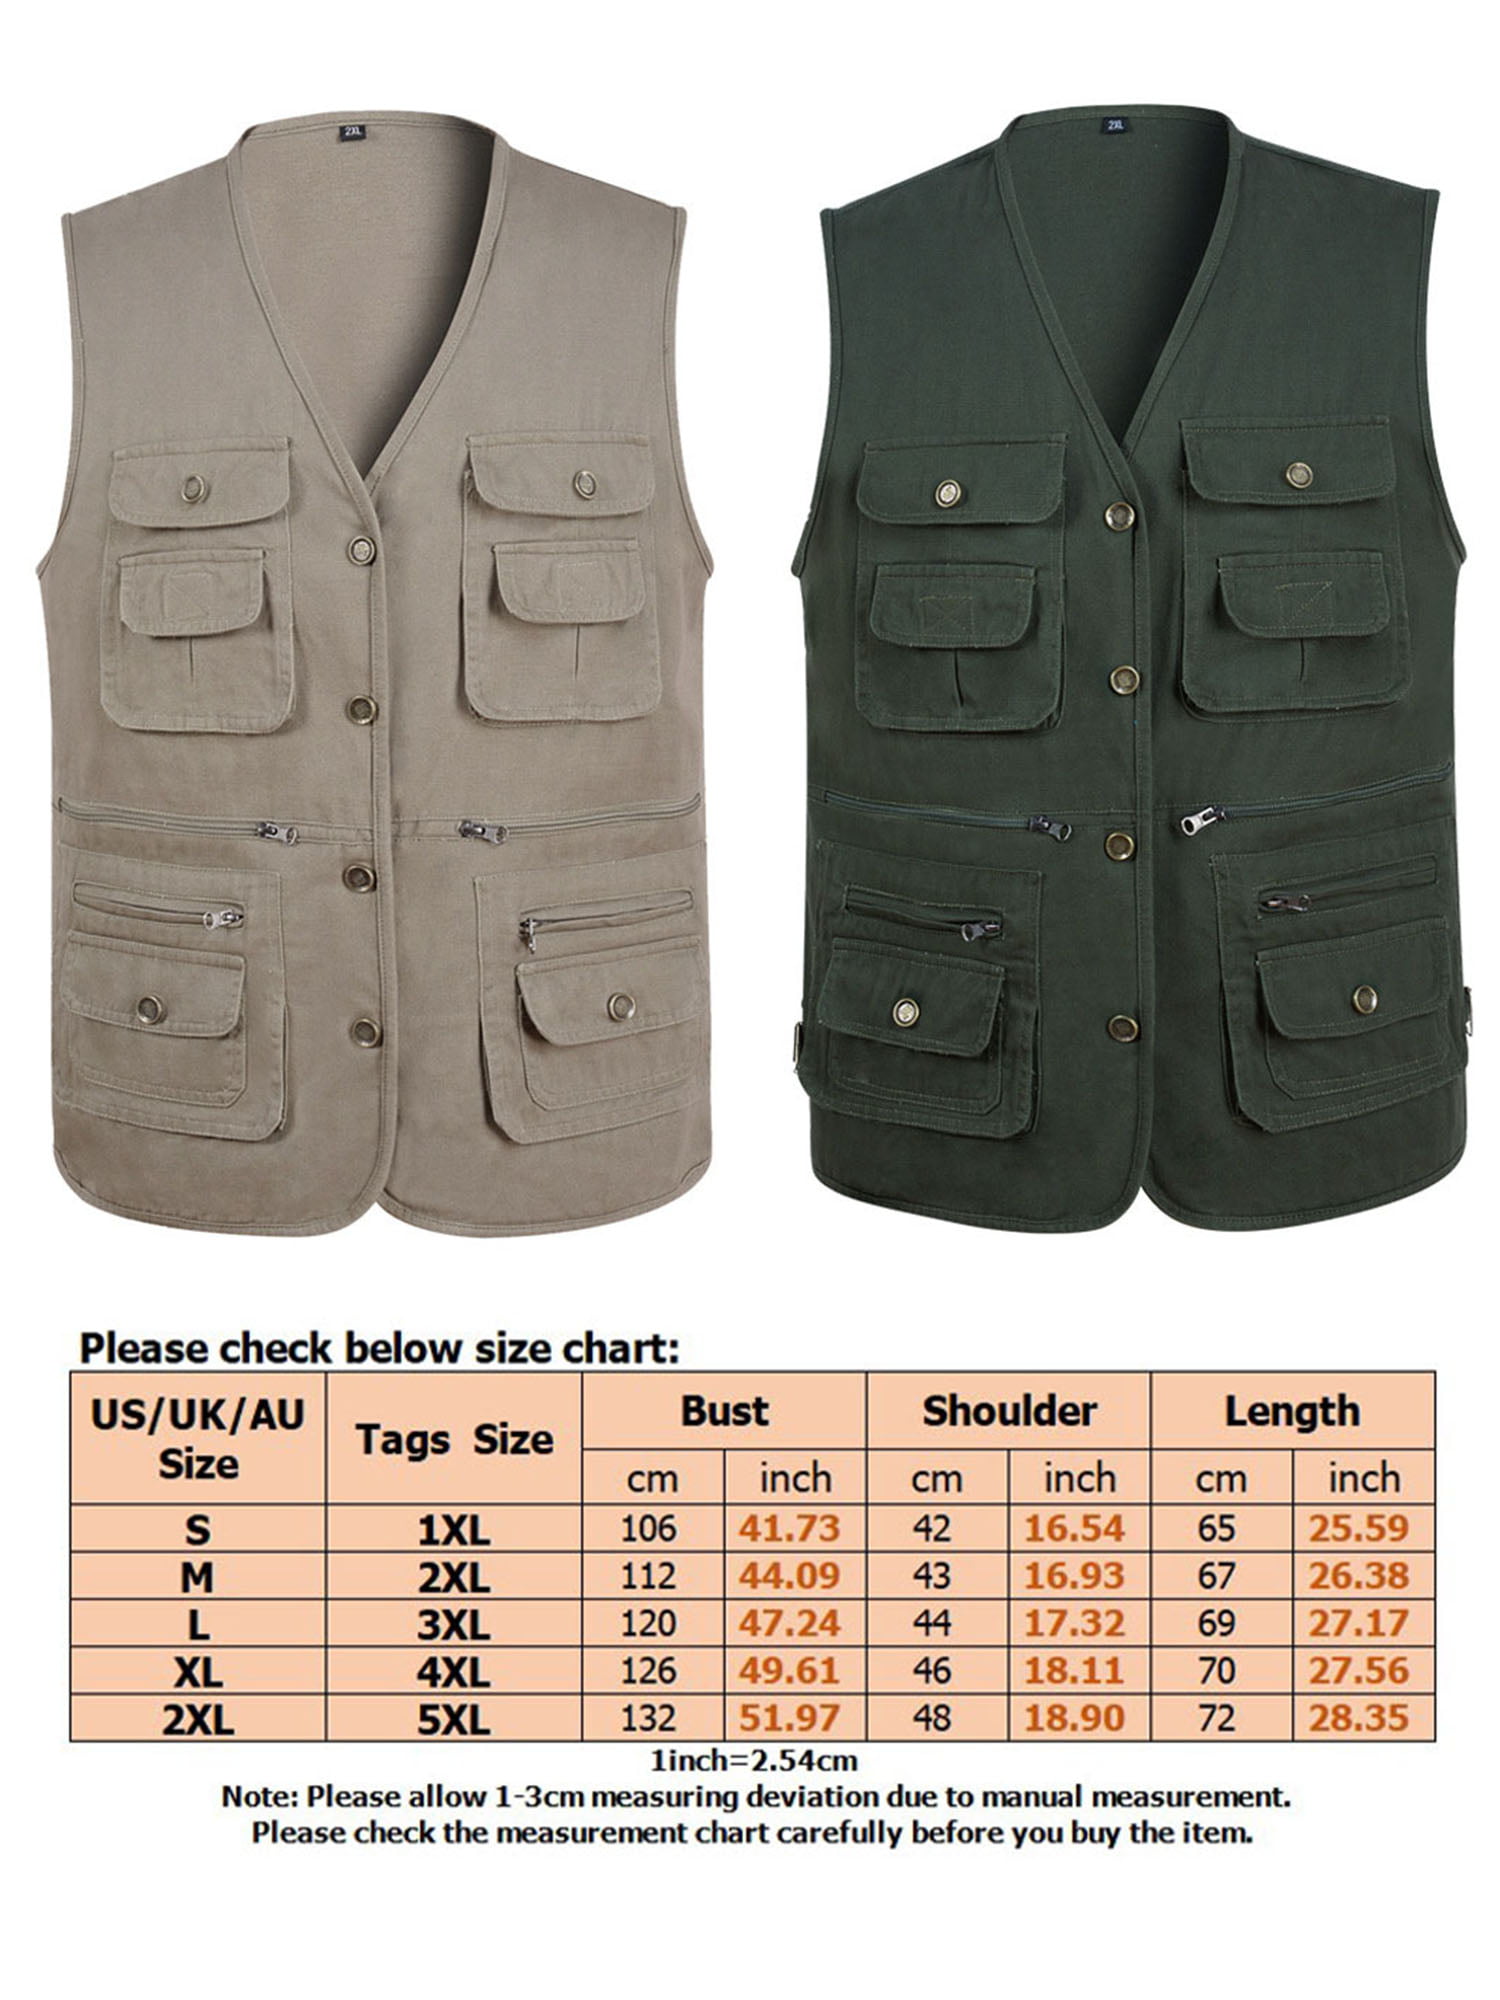 Ryrjj Men's Outerwear Vests Casual Outdoor Work Hiking Fishing Vest Lightweight Travel Photo Cargo Vest Jacket with Multi-Pockets(Khaki,XXL), Size